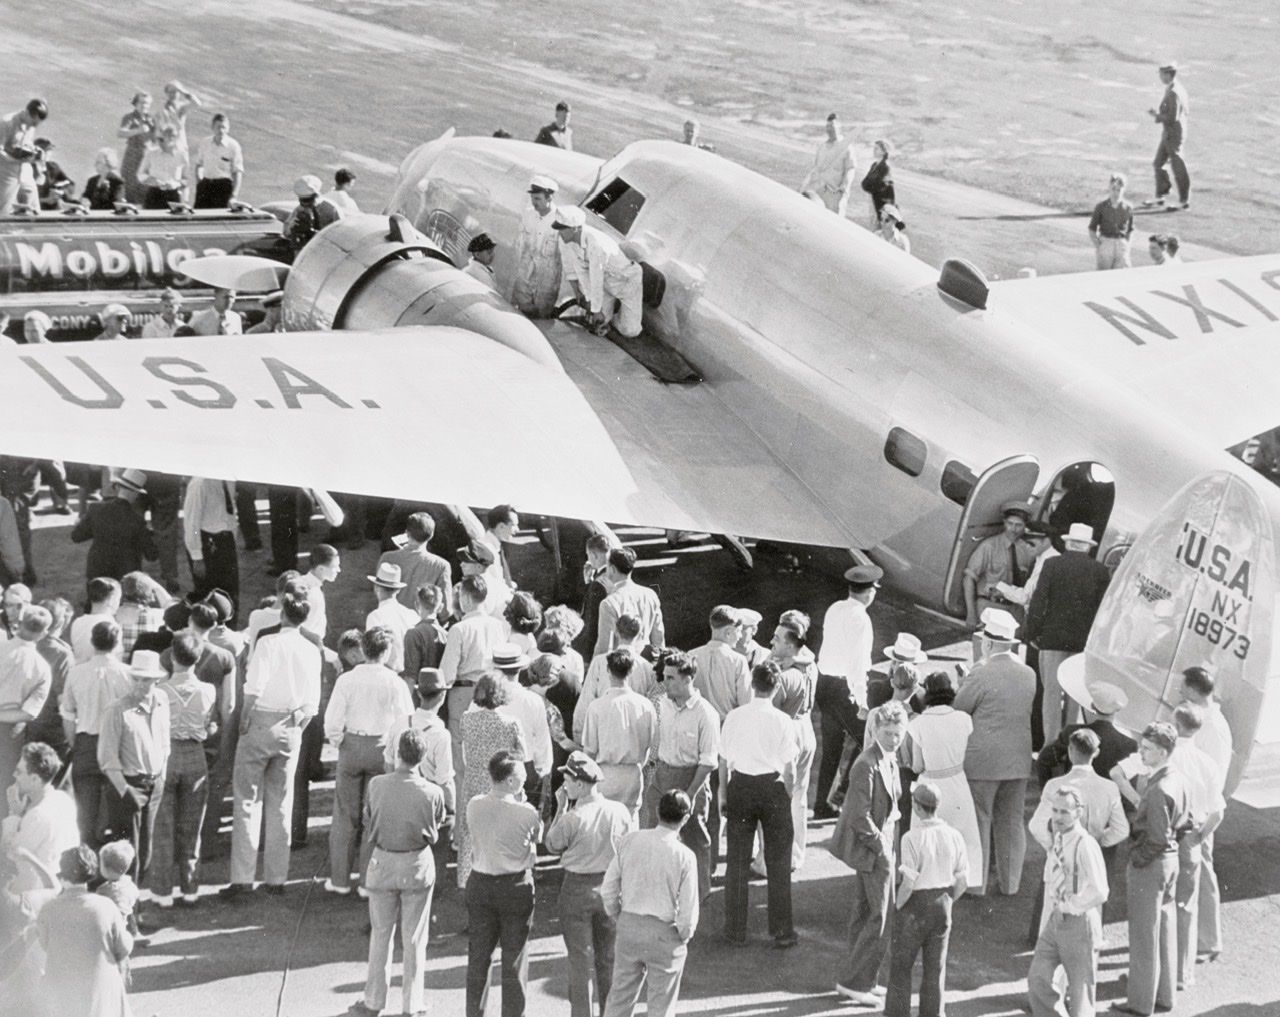 Hughes Lockheed Electra